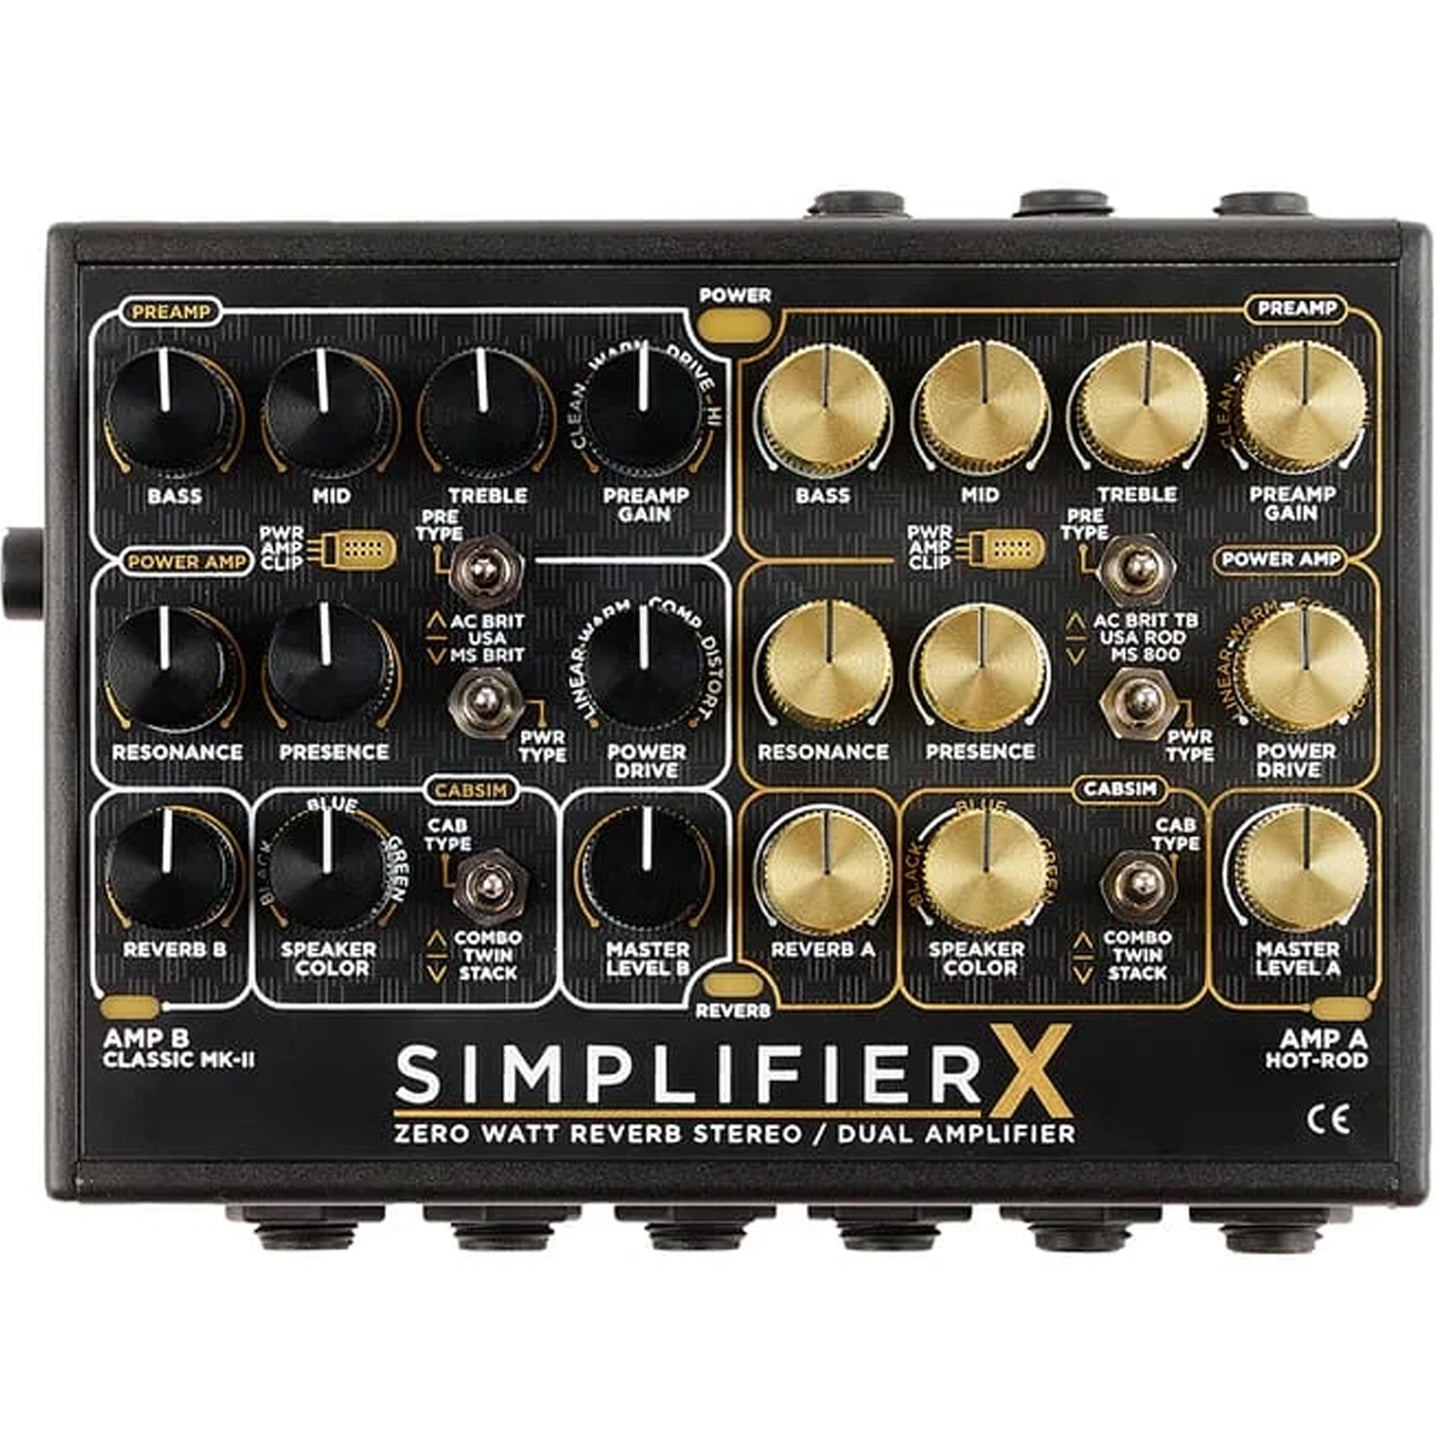 DSM Humboldt Electronics Simplifier X Reverb Stereo/Dual Amplifier Pedal